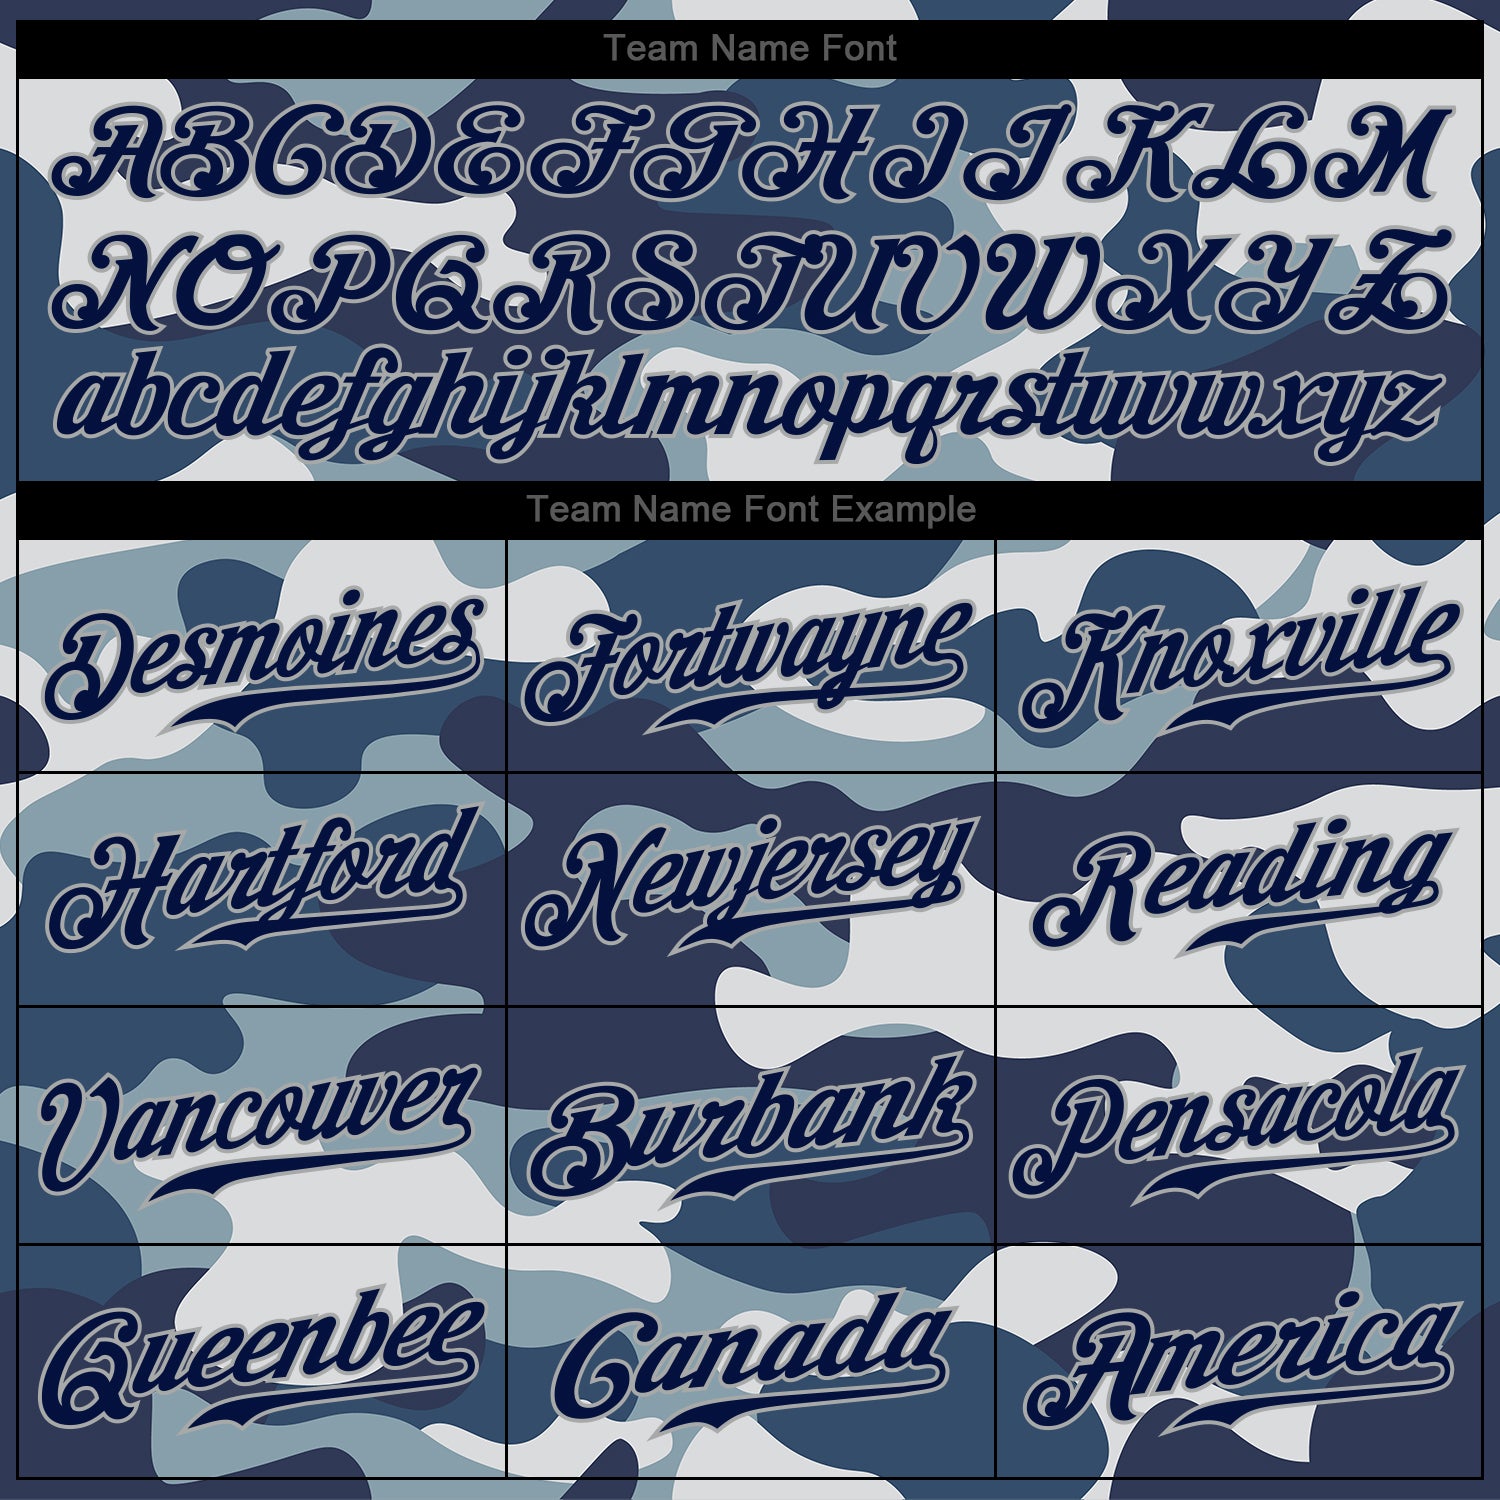 Custom Camo Navy-Powder Blue Authentic Salute To Service Baseball Jersey